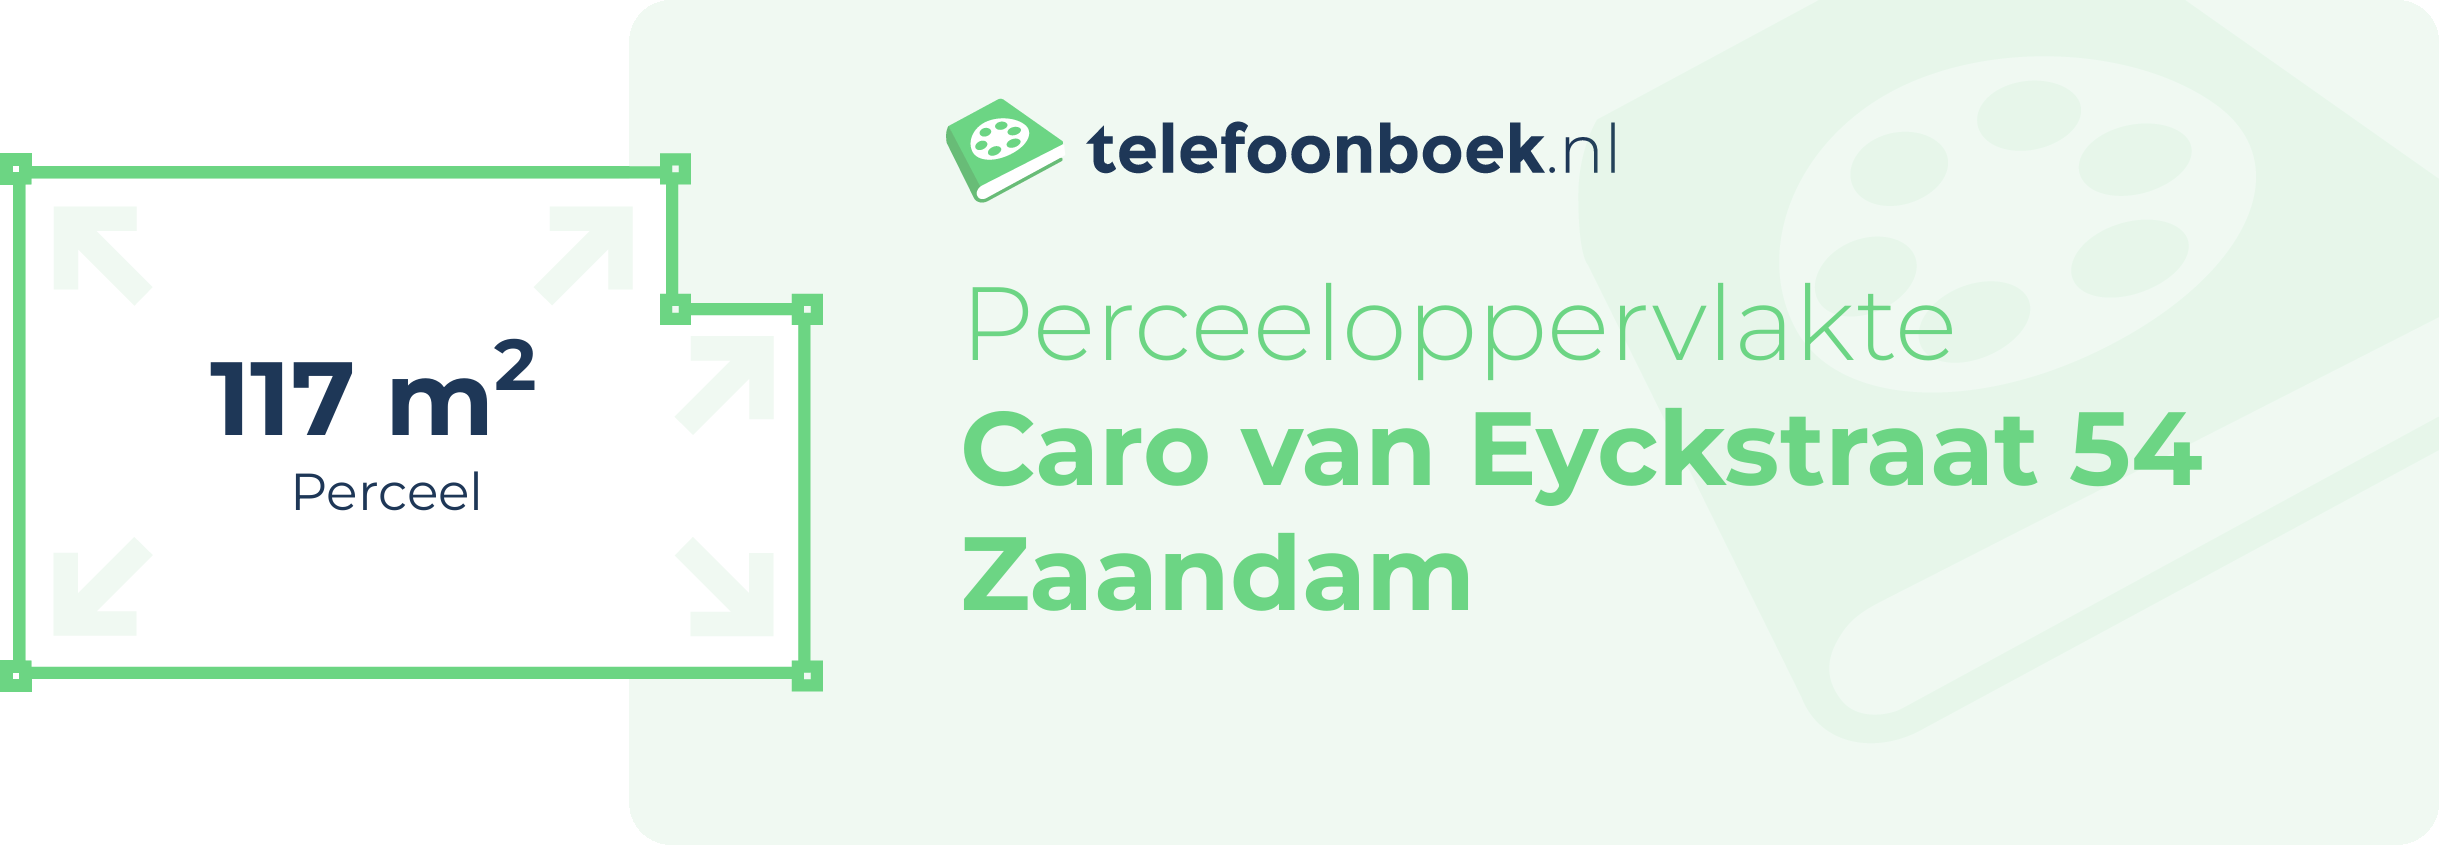 Perceeloppervlakte Caro Van Eyckstraat 54 Zaandam